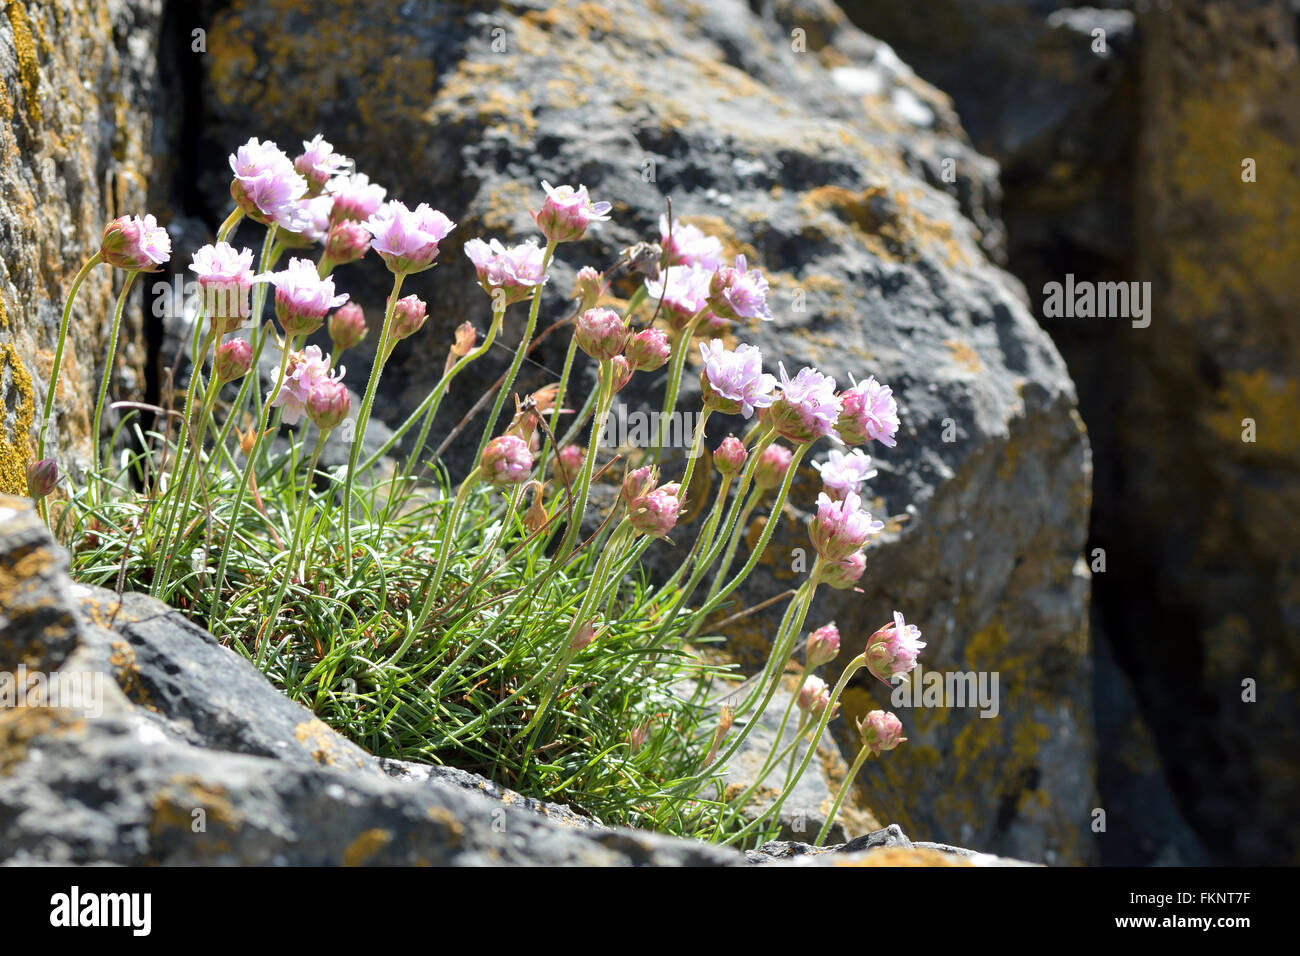 Sea thrift (Almeria maritima). Flowers of plant in family Pumbaginaceae, growing on rocky British coastline Stock Photo